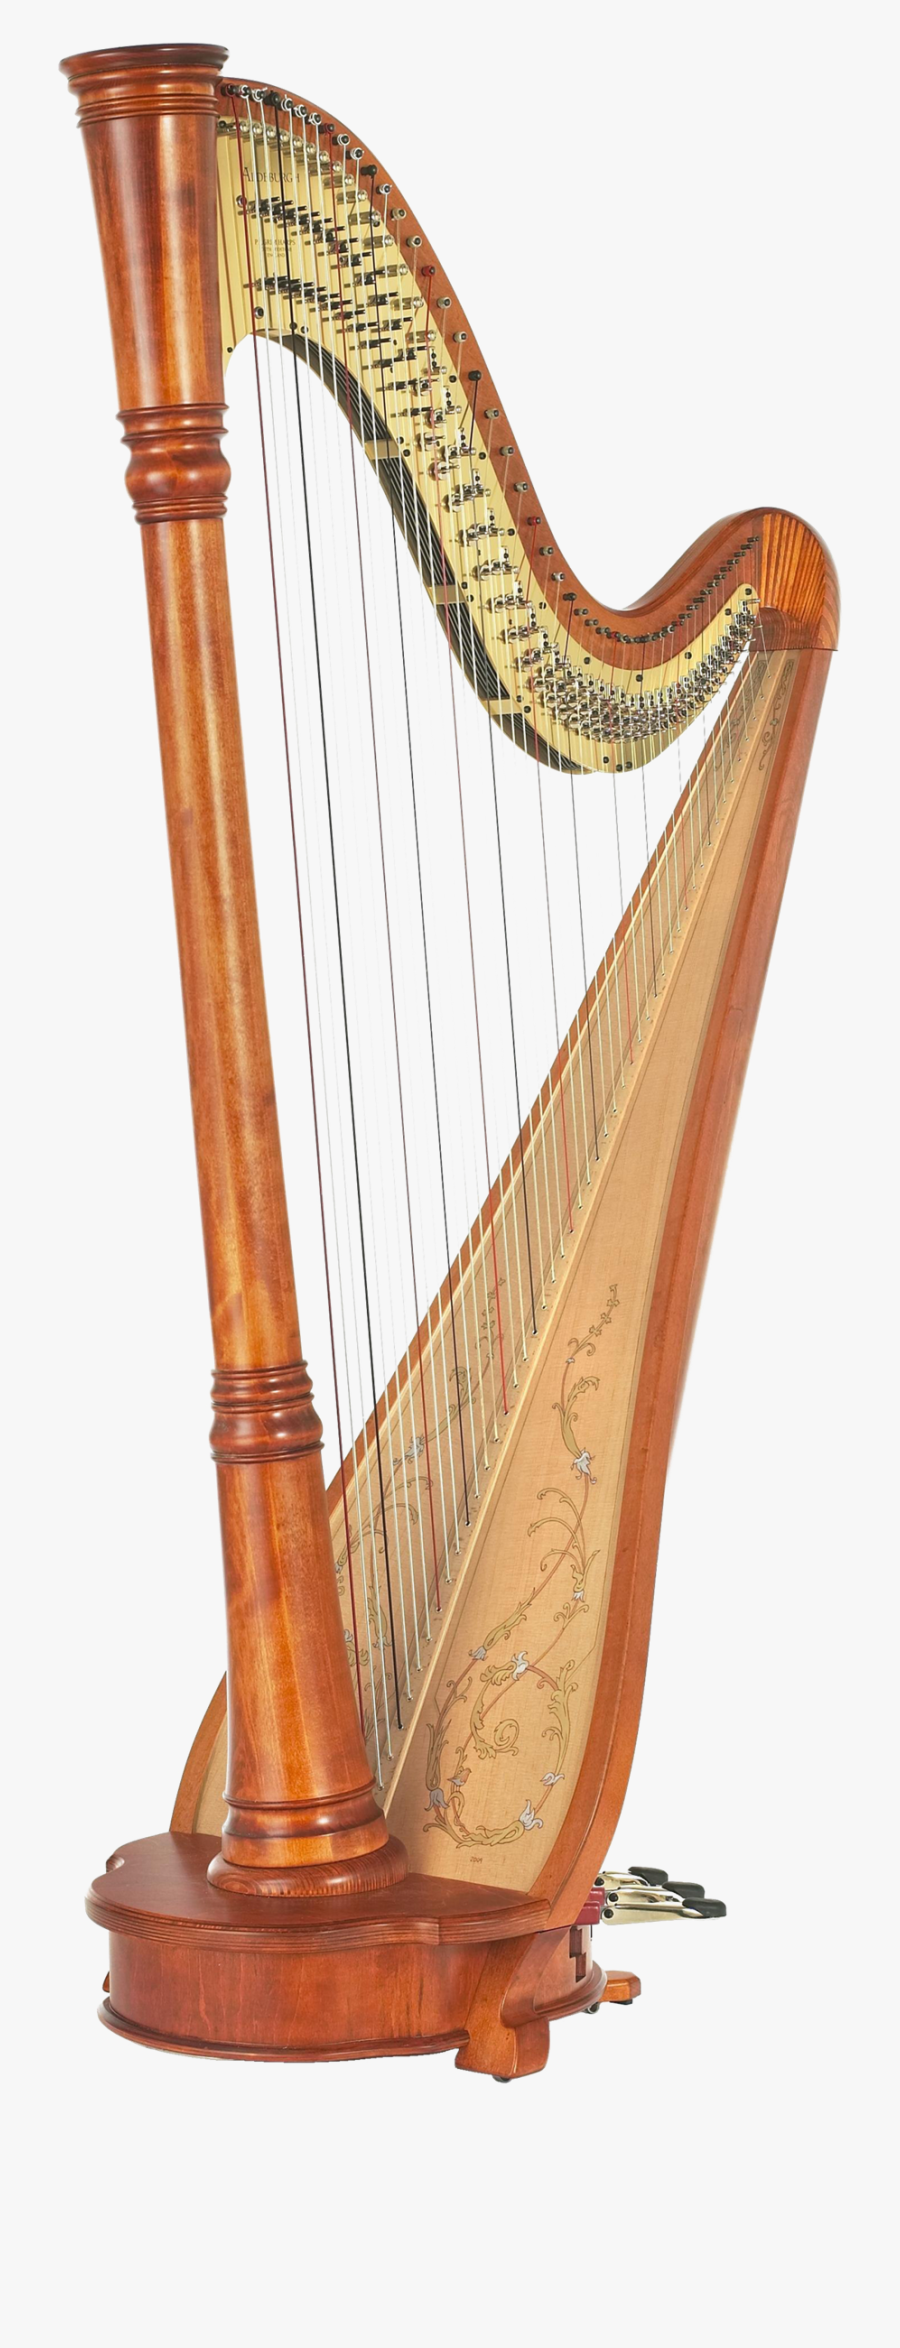 Wood Harp Png Hd Image - Pedal Harp, Transparent Clipart